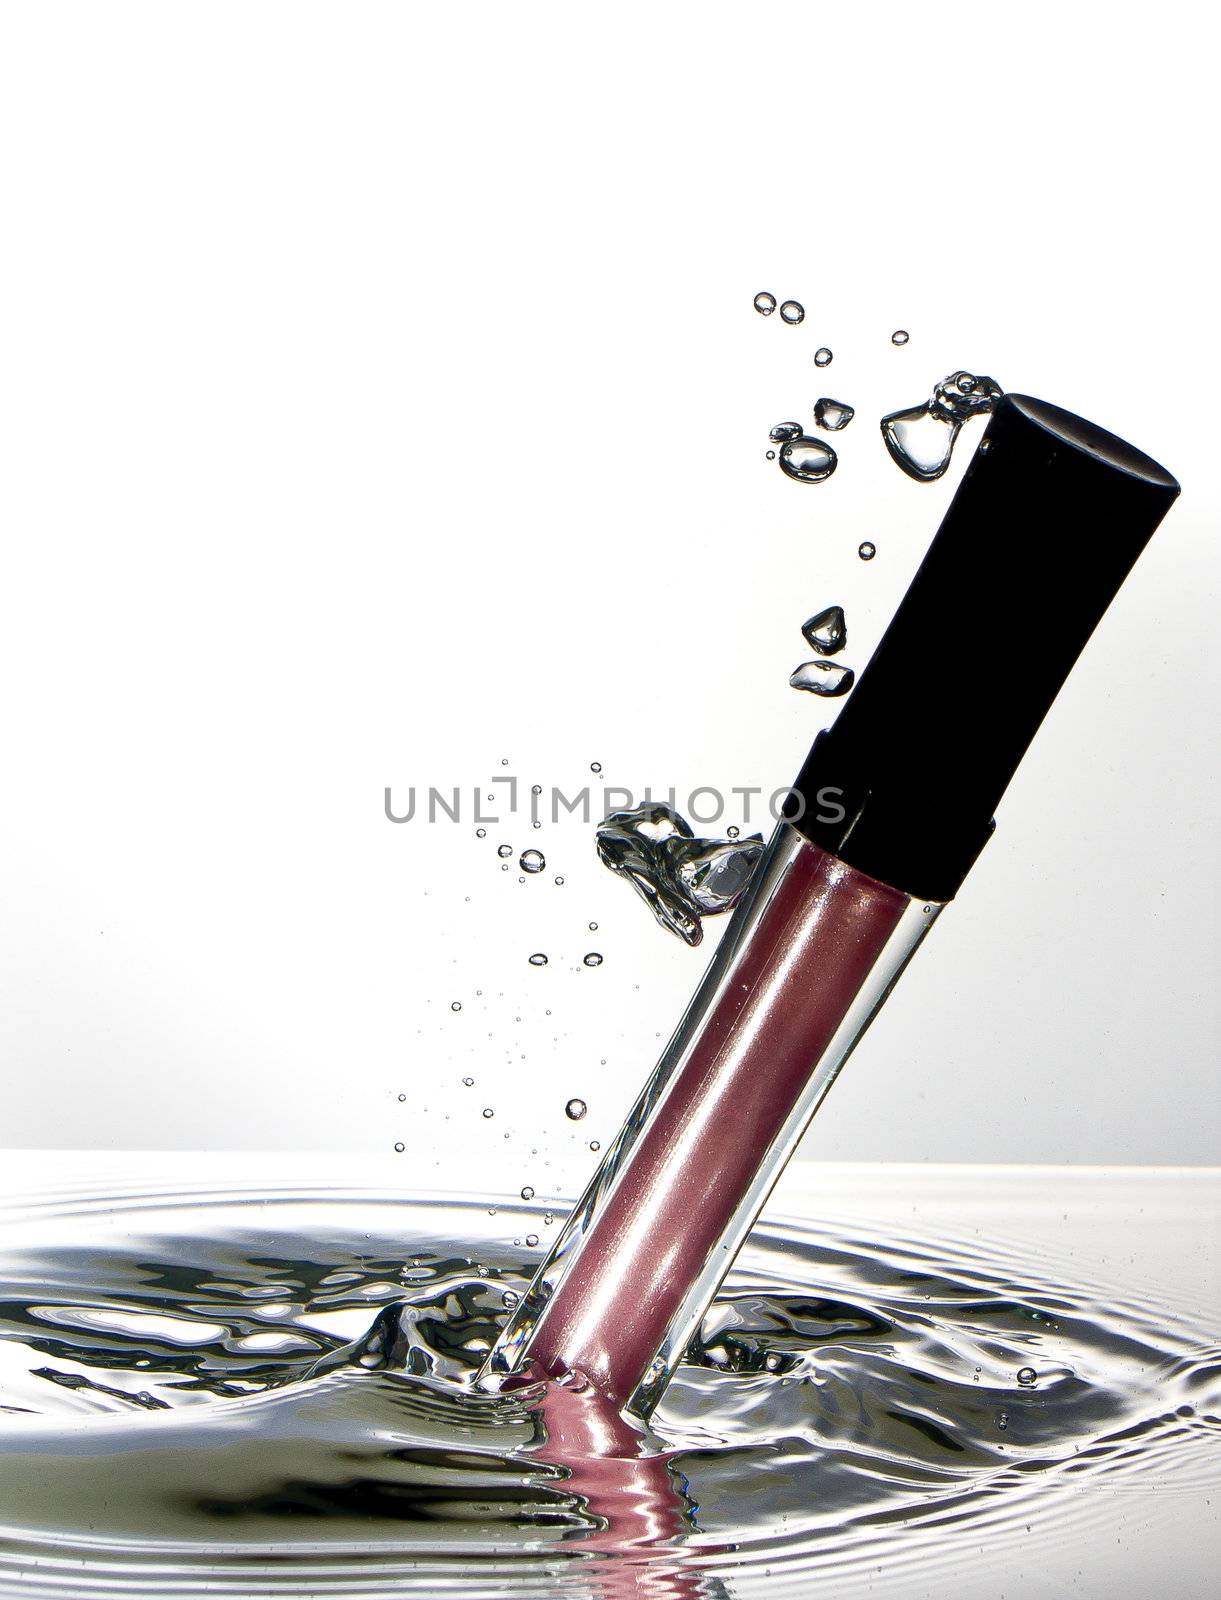 Cosmetics water splash by tpfeller